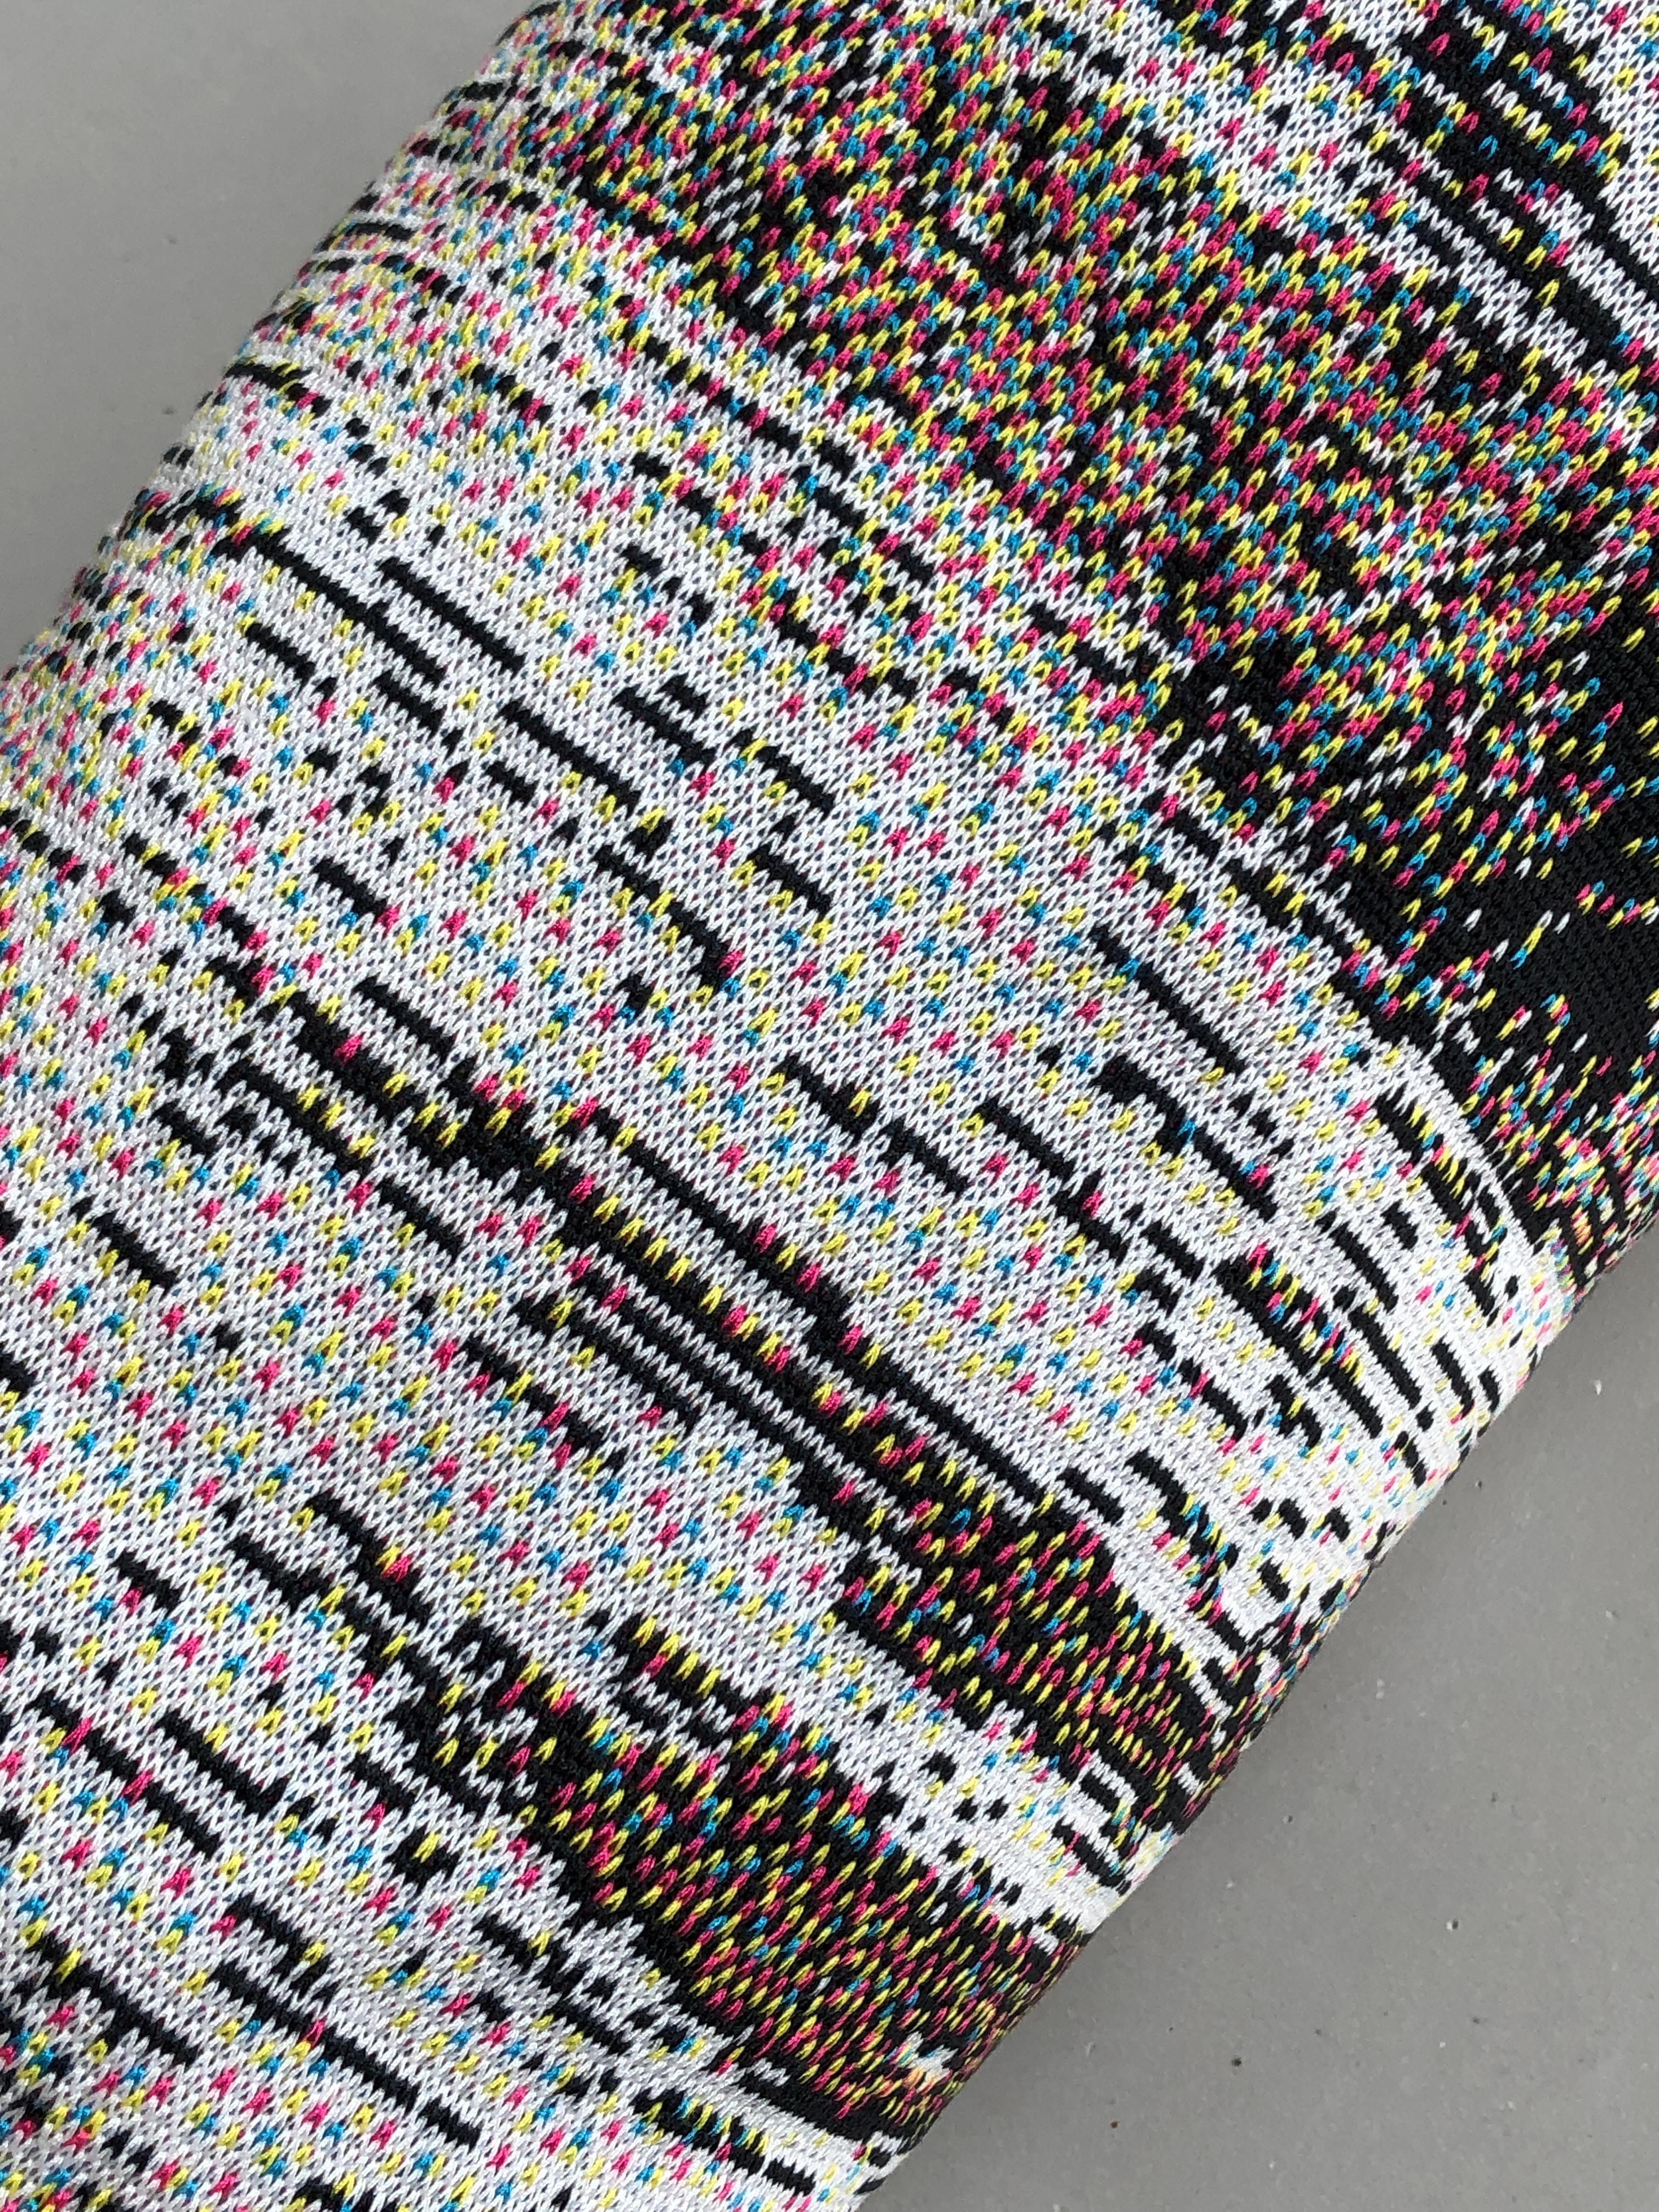 Needlework White birch tree log bolster knitted pixeled pillow long - Textile - Pillows For Sale